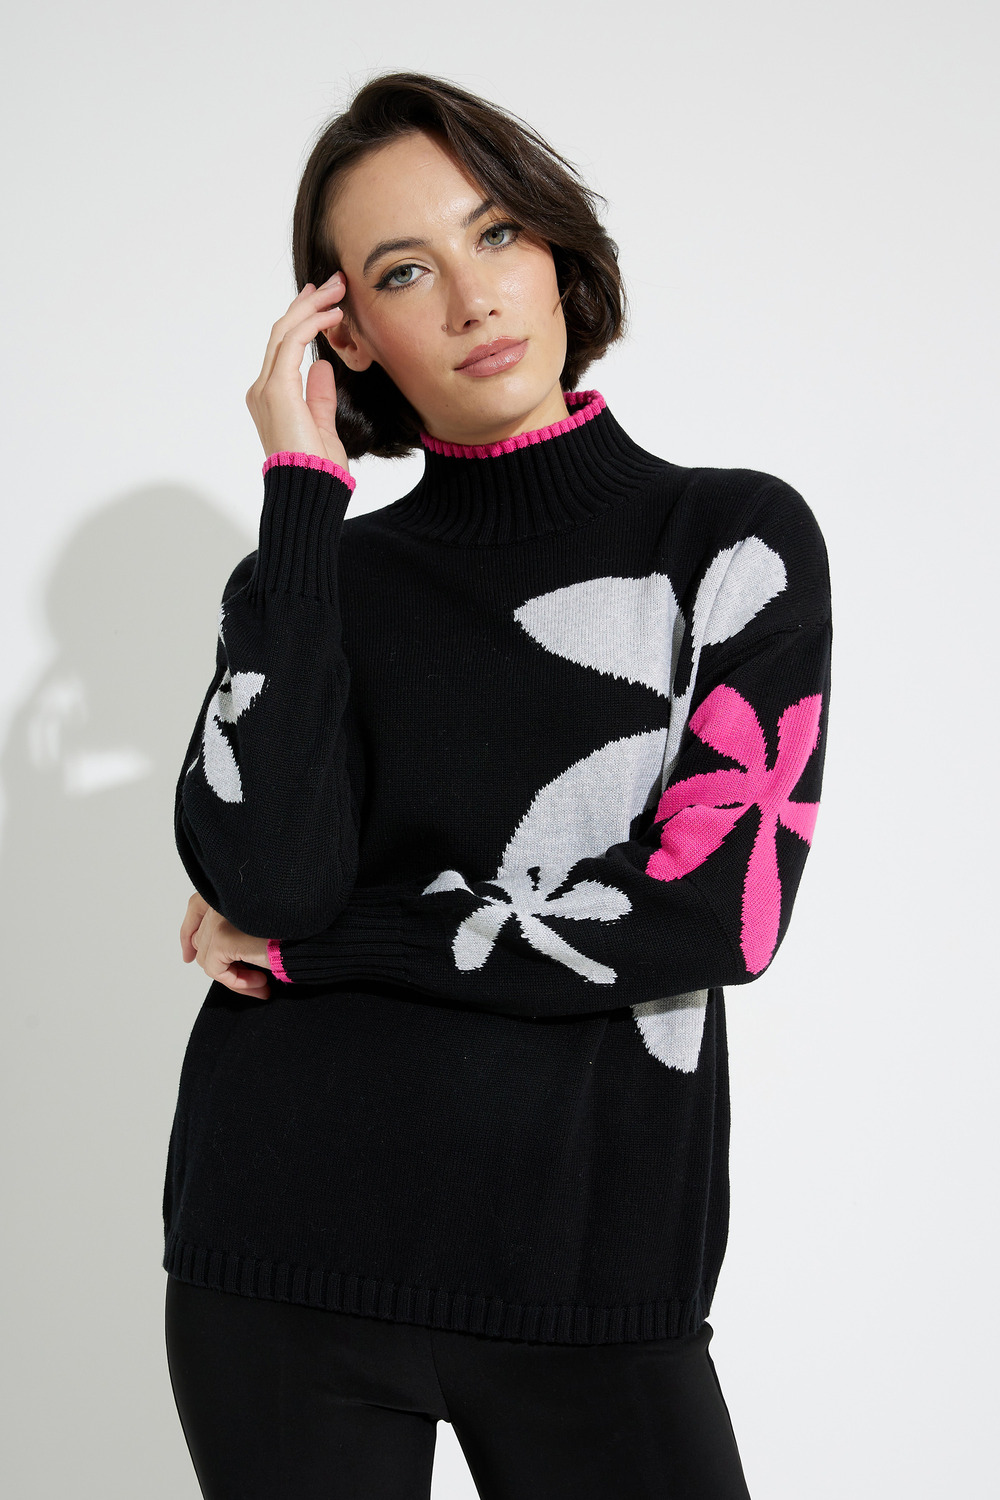 Floral Motif Sweater Style EW29006. Black/multi